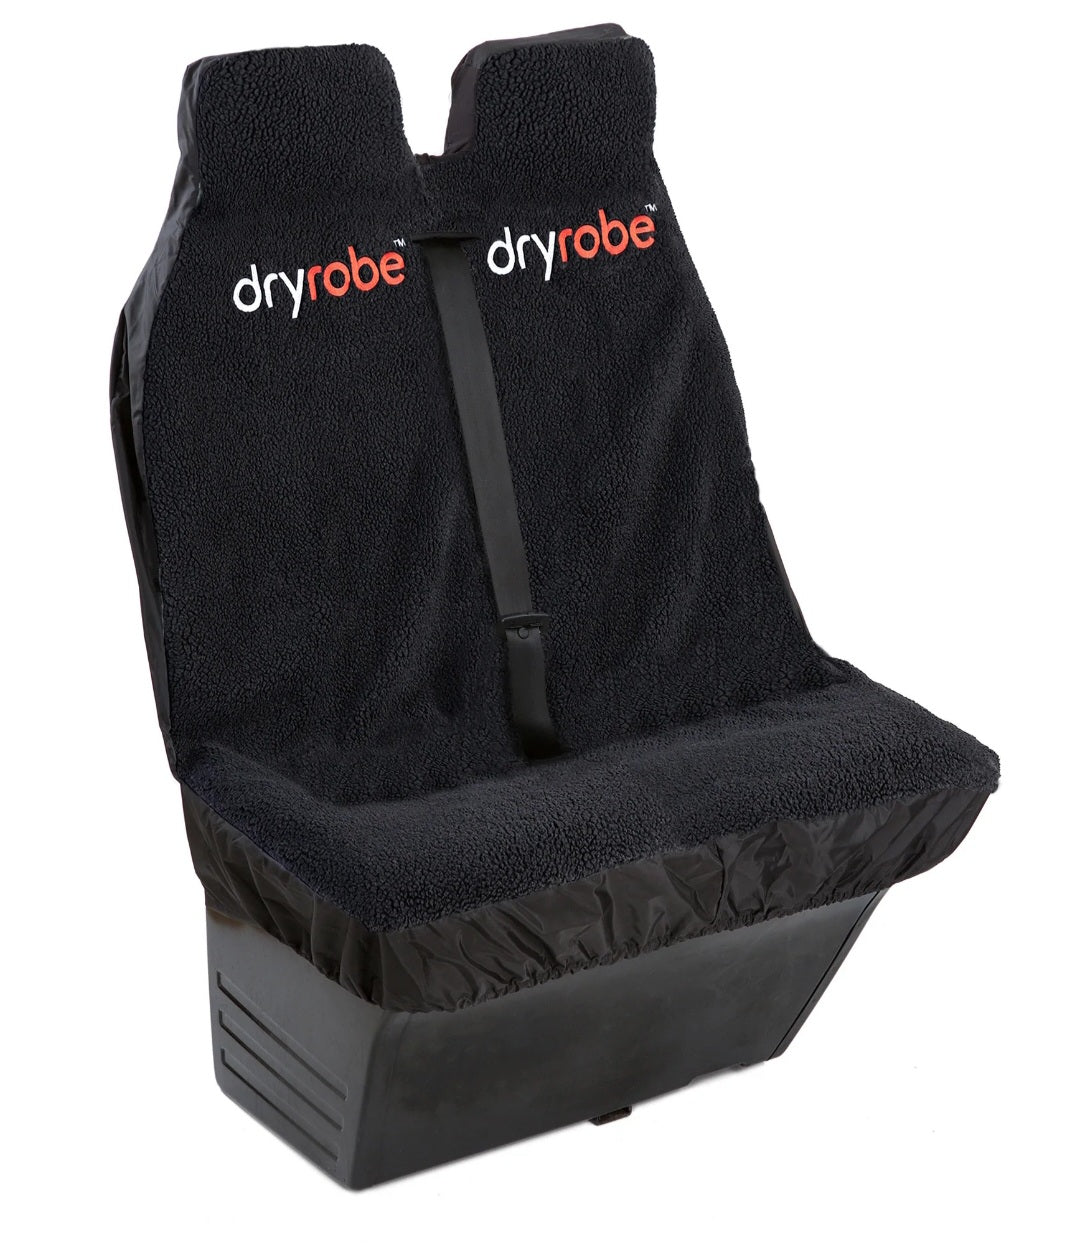 DRYROBE Double Car / Van Seat Cover - Black